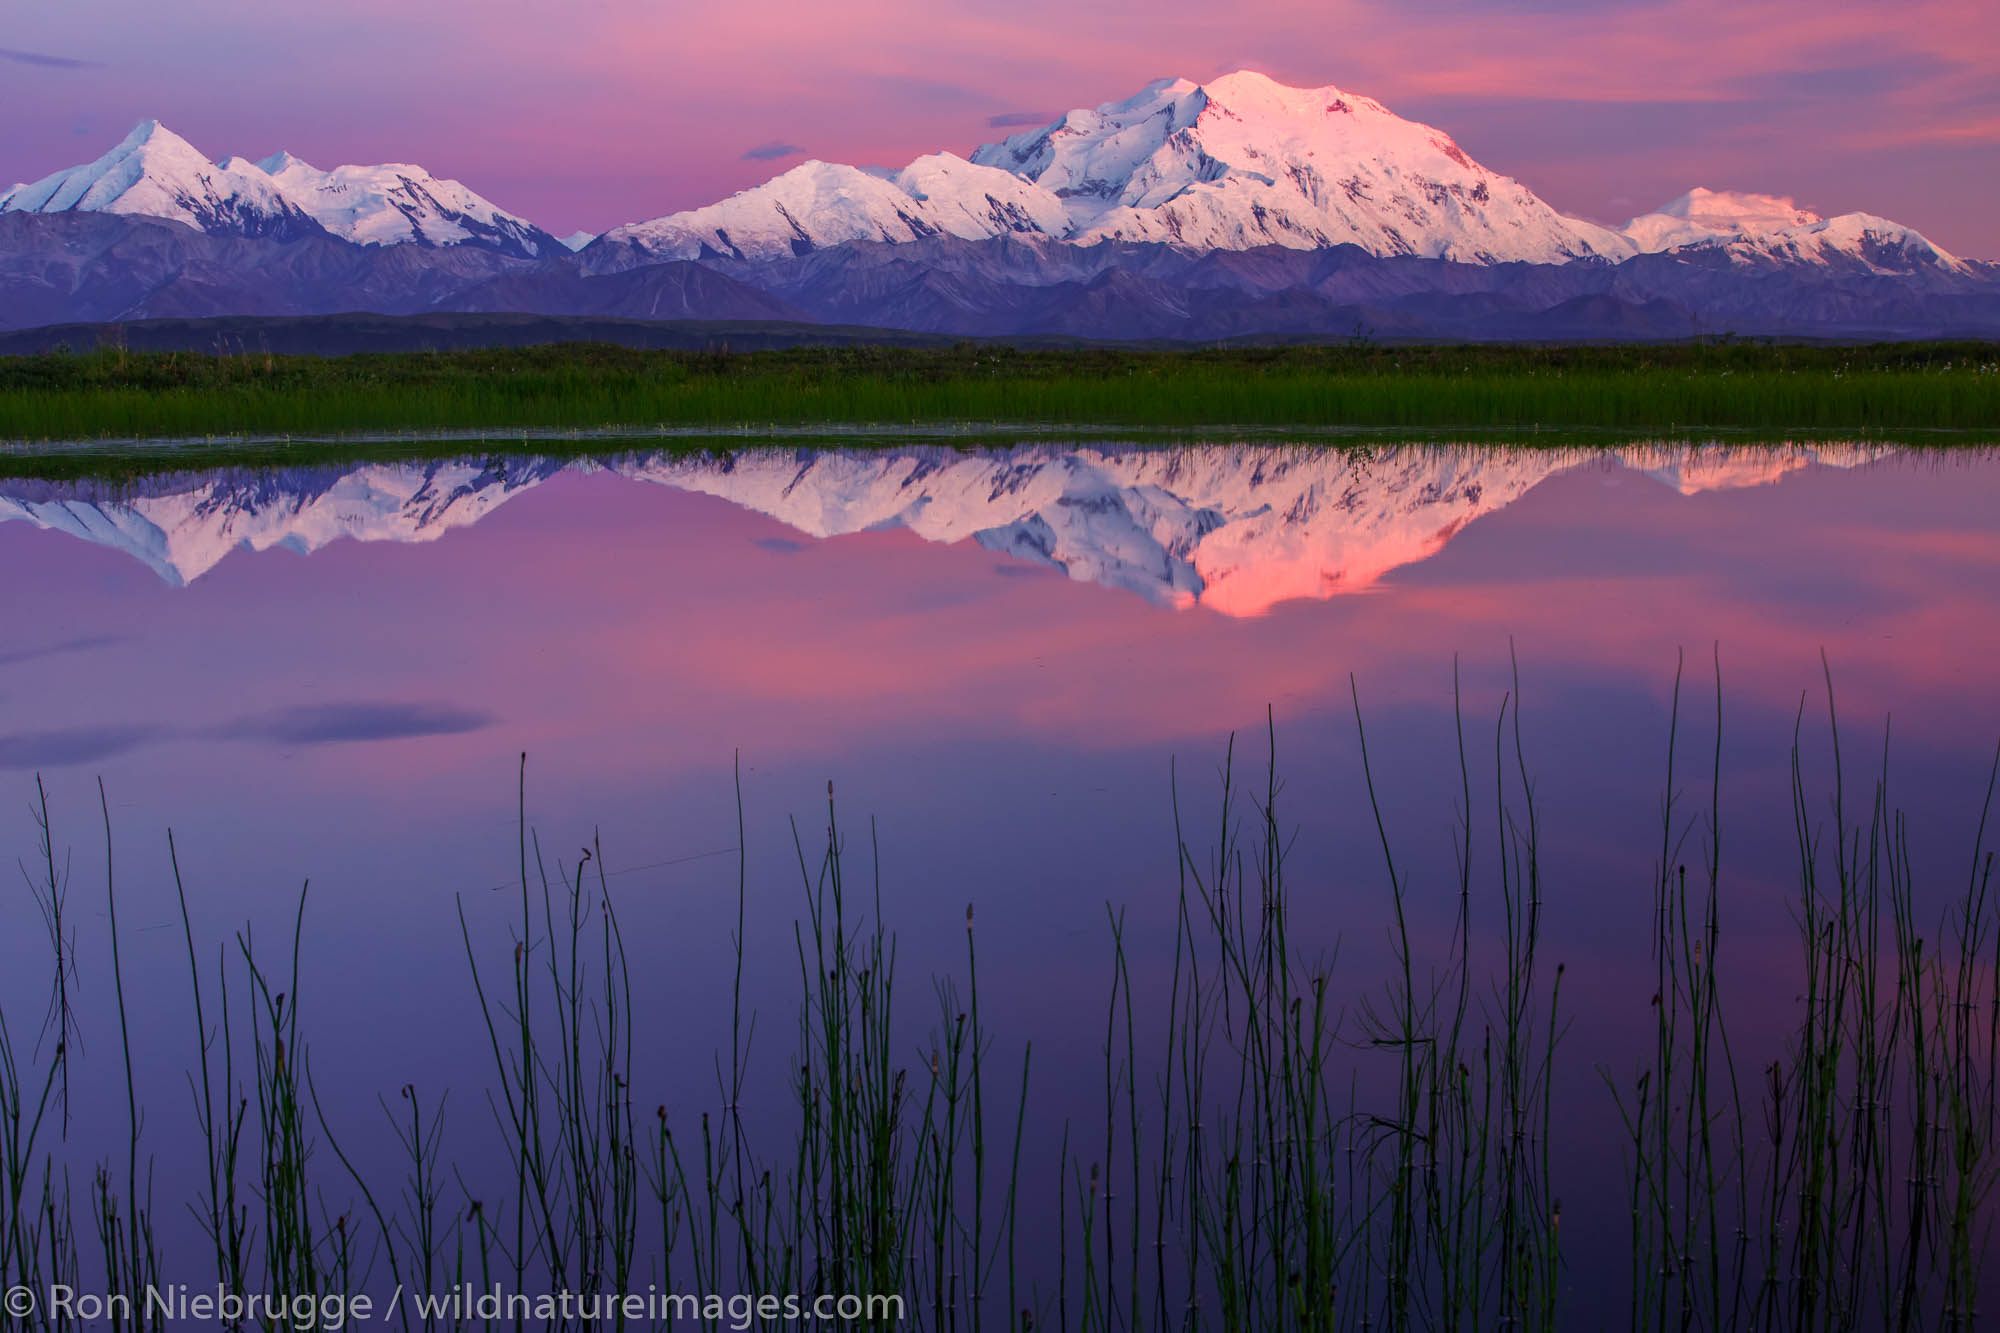 Mt. McKinley, also known as Denali, Denali National Park, Alaska.